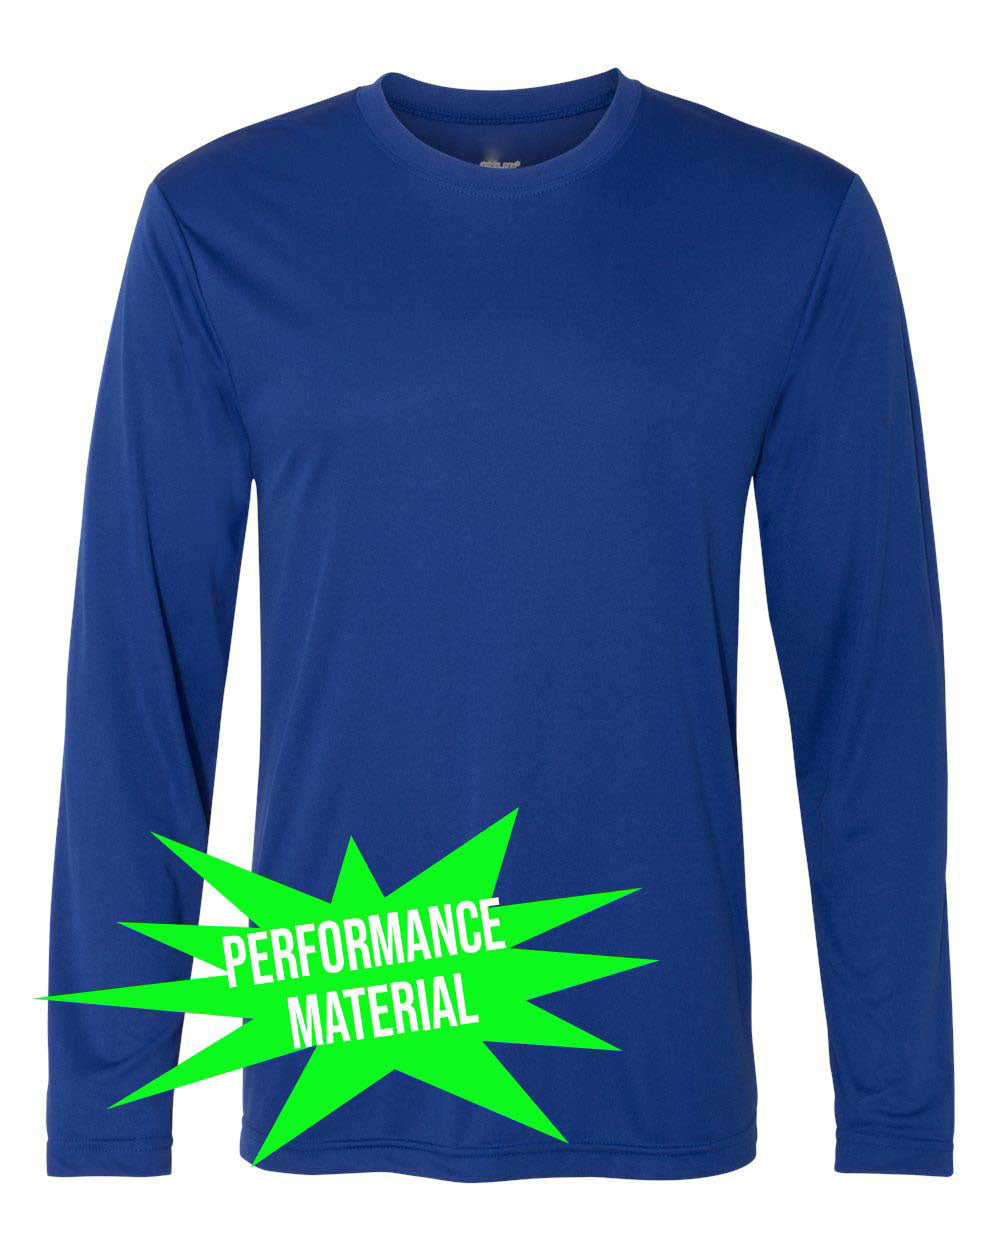 Franklin School Performance Material Design 2 Long Sleeve Shirt